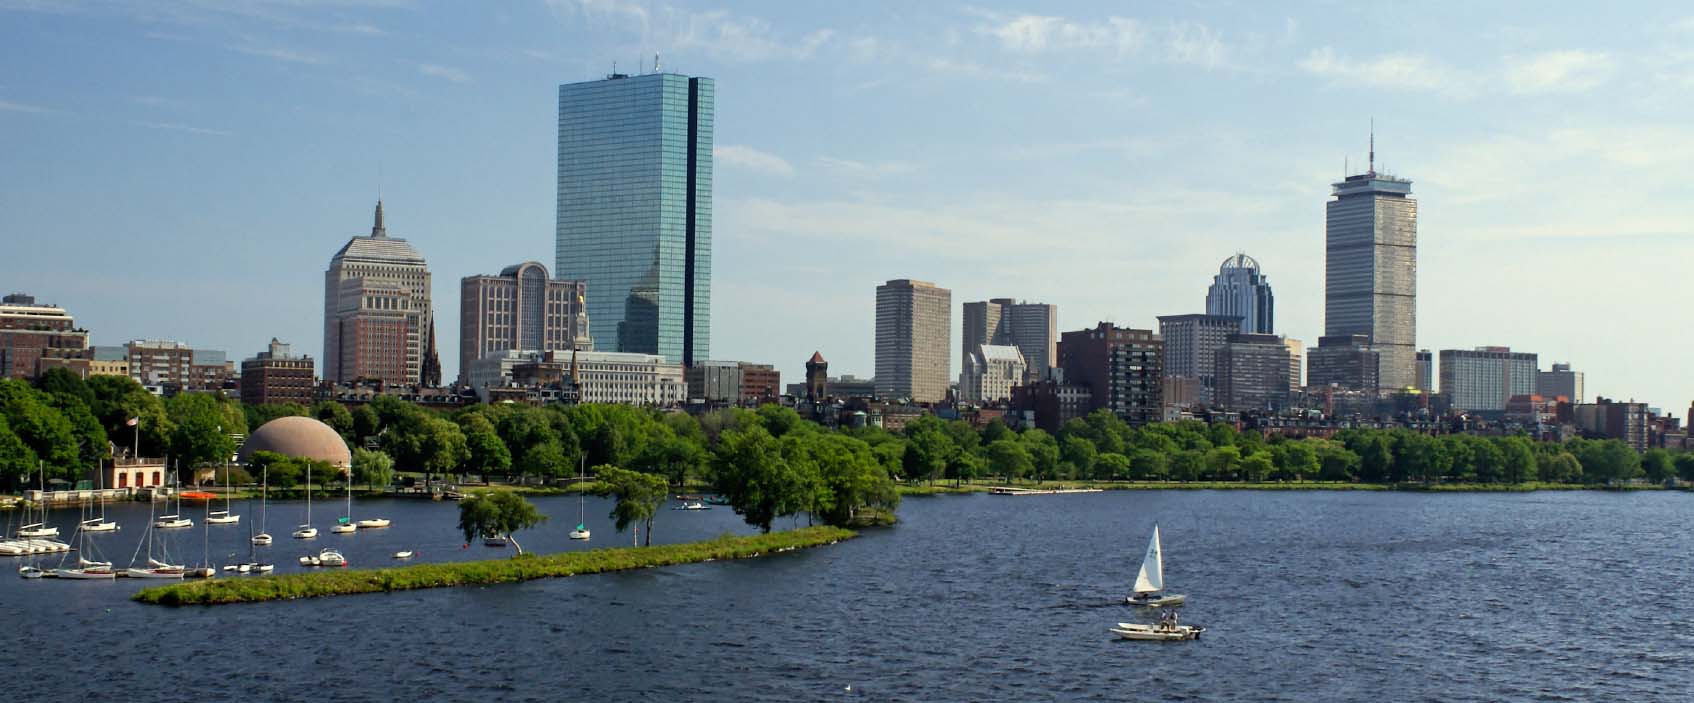 Sailboats under the Boston Skyline